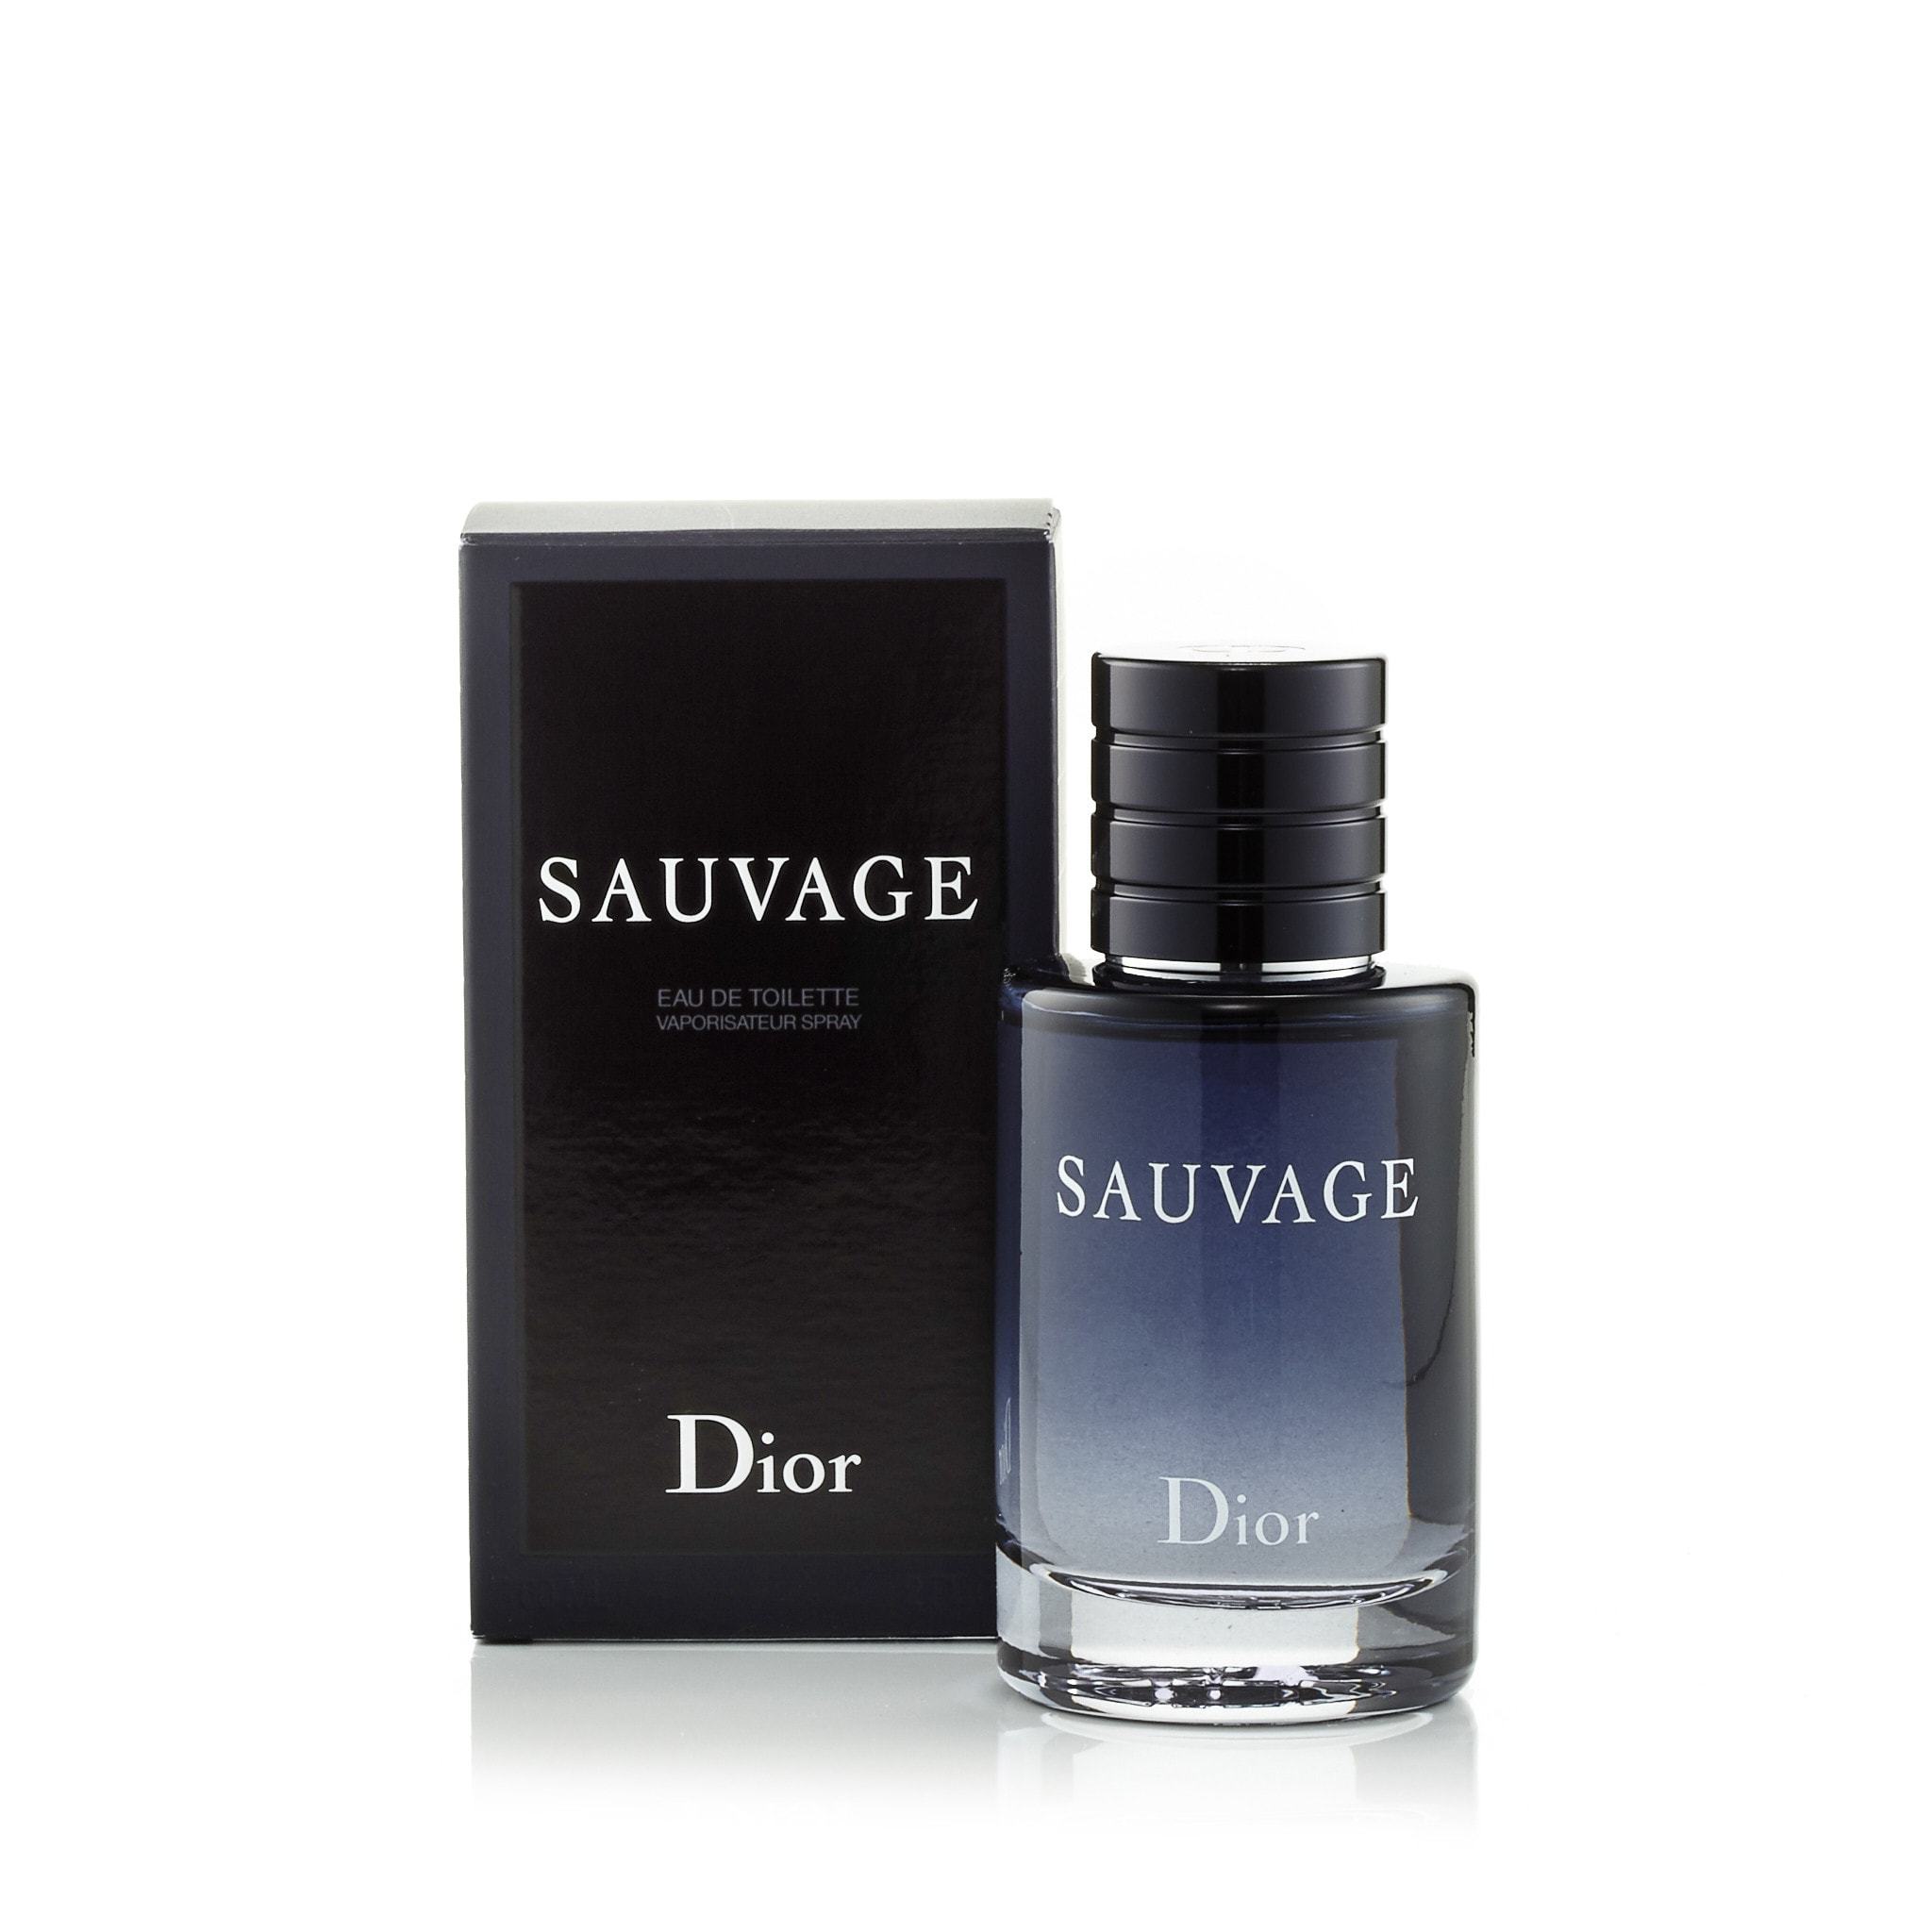 Dior Sauvage Eau De Parfum 100ml